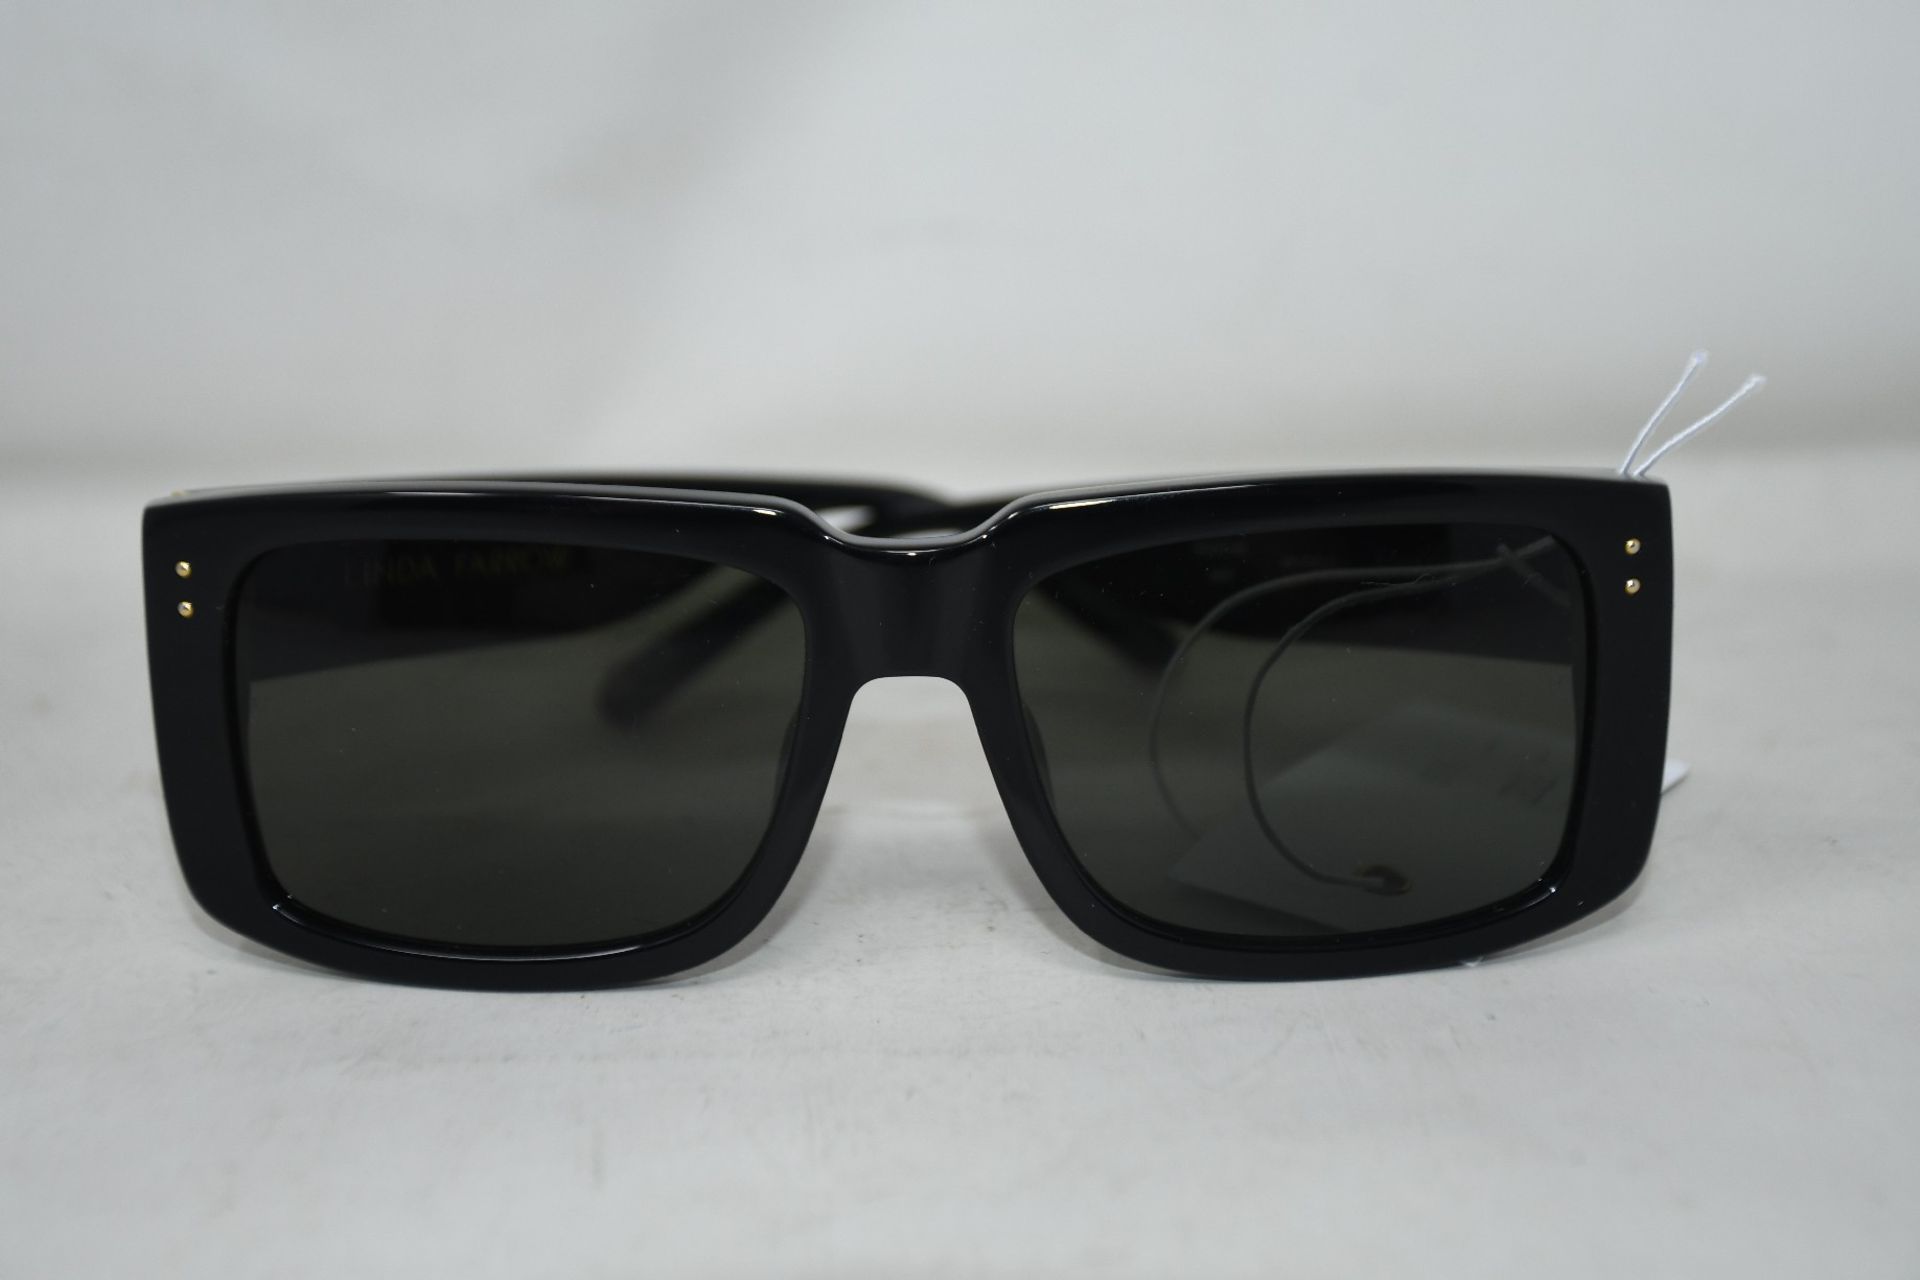 A pair of as new Linda Farrow Morrison sunglasses (RRP £300 - no case).